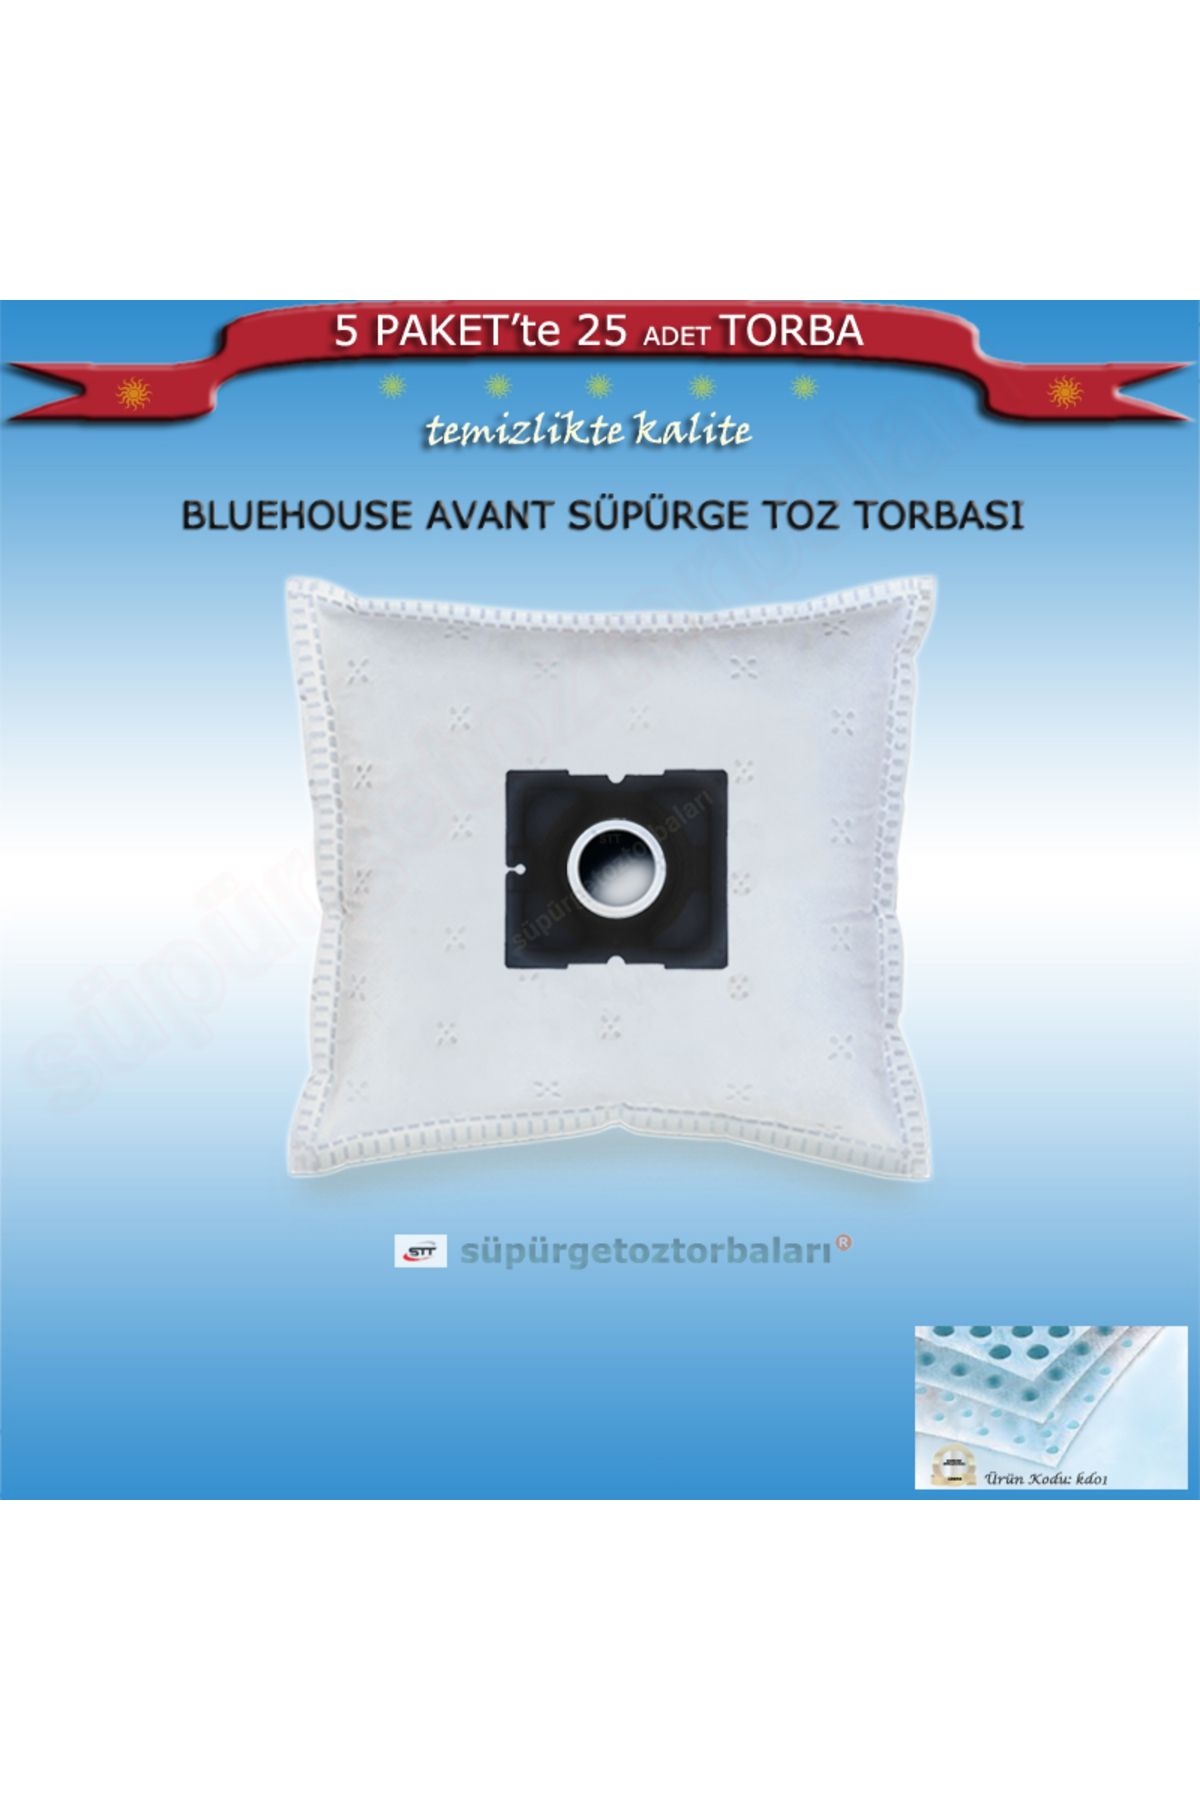 BLUE HOUSE Bluehouse Bh0 22a Avant Süpürge Toz Torbası 25 Adet Torba Kd01